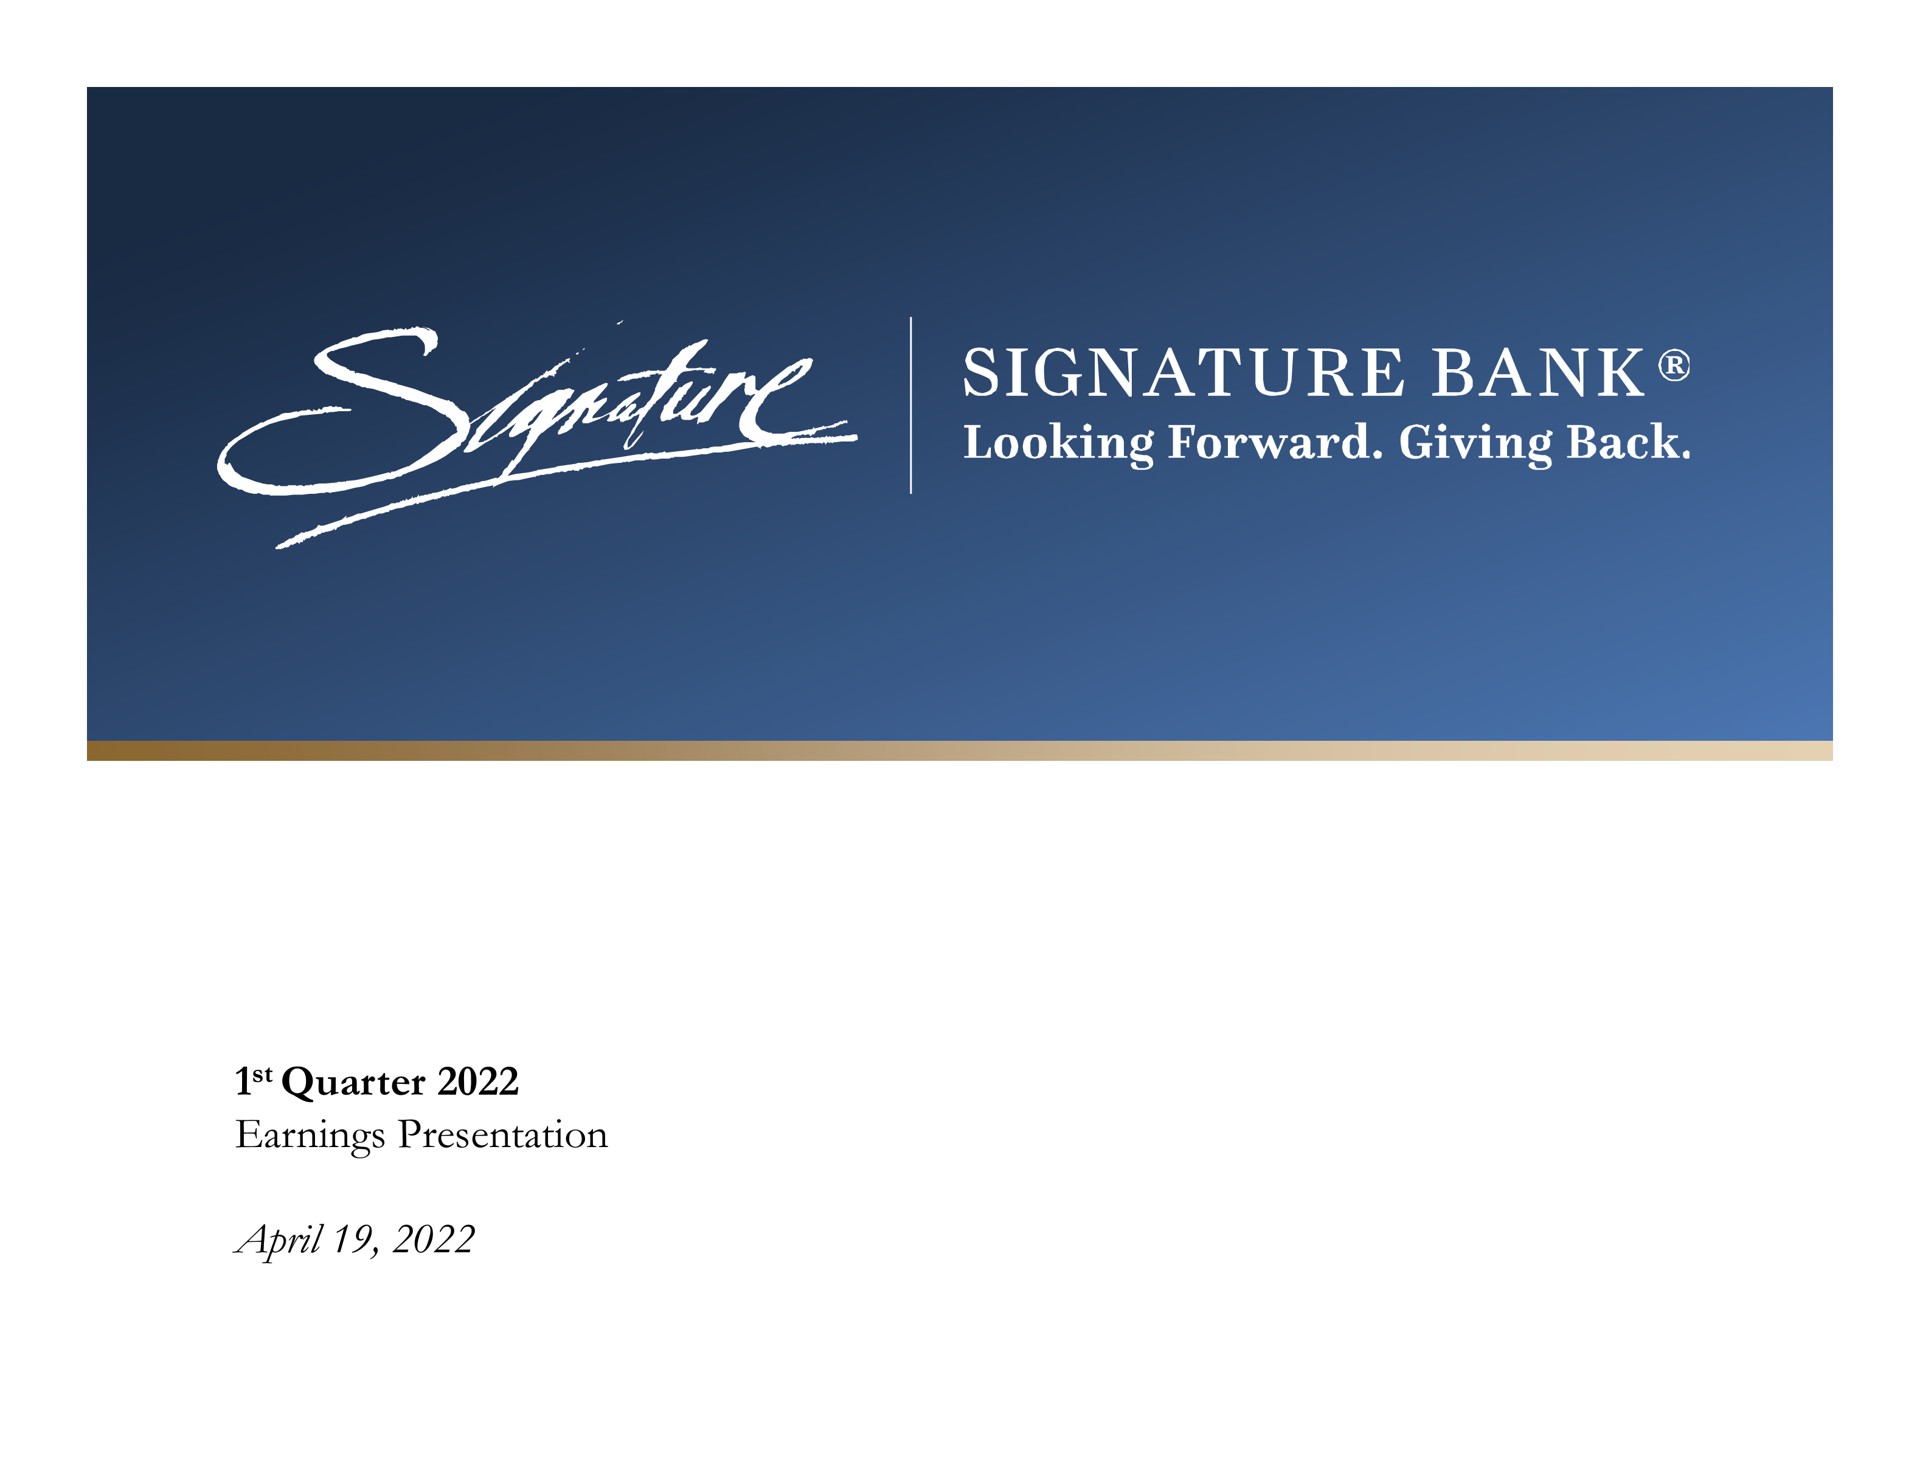 quarter earnings presentation signature bank looking forward giving back | Signature Bank